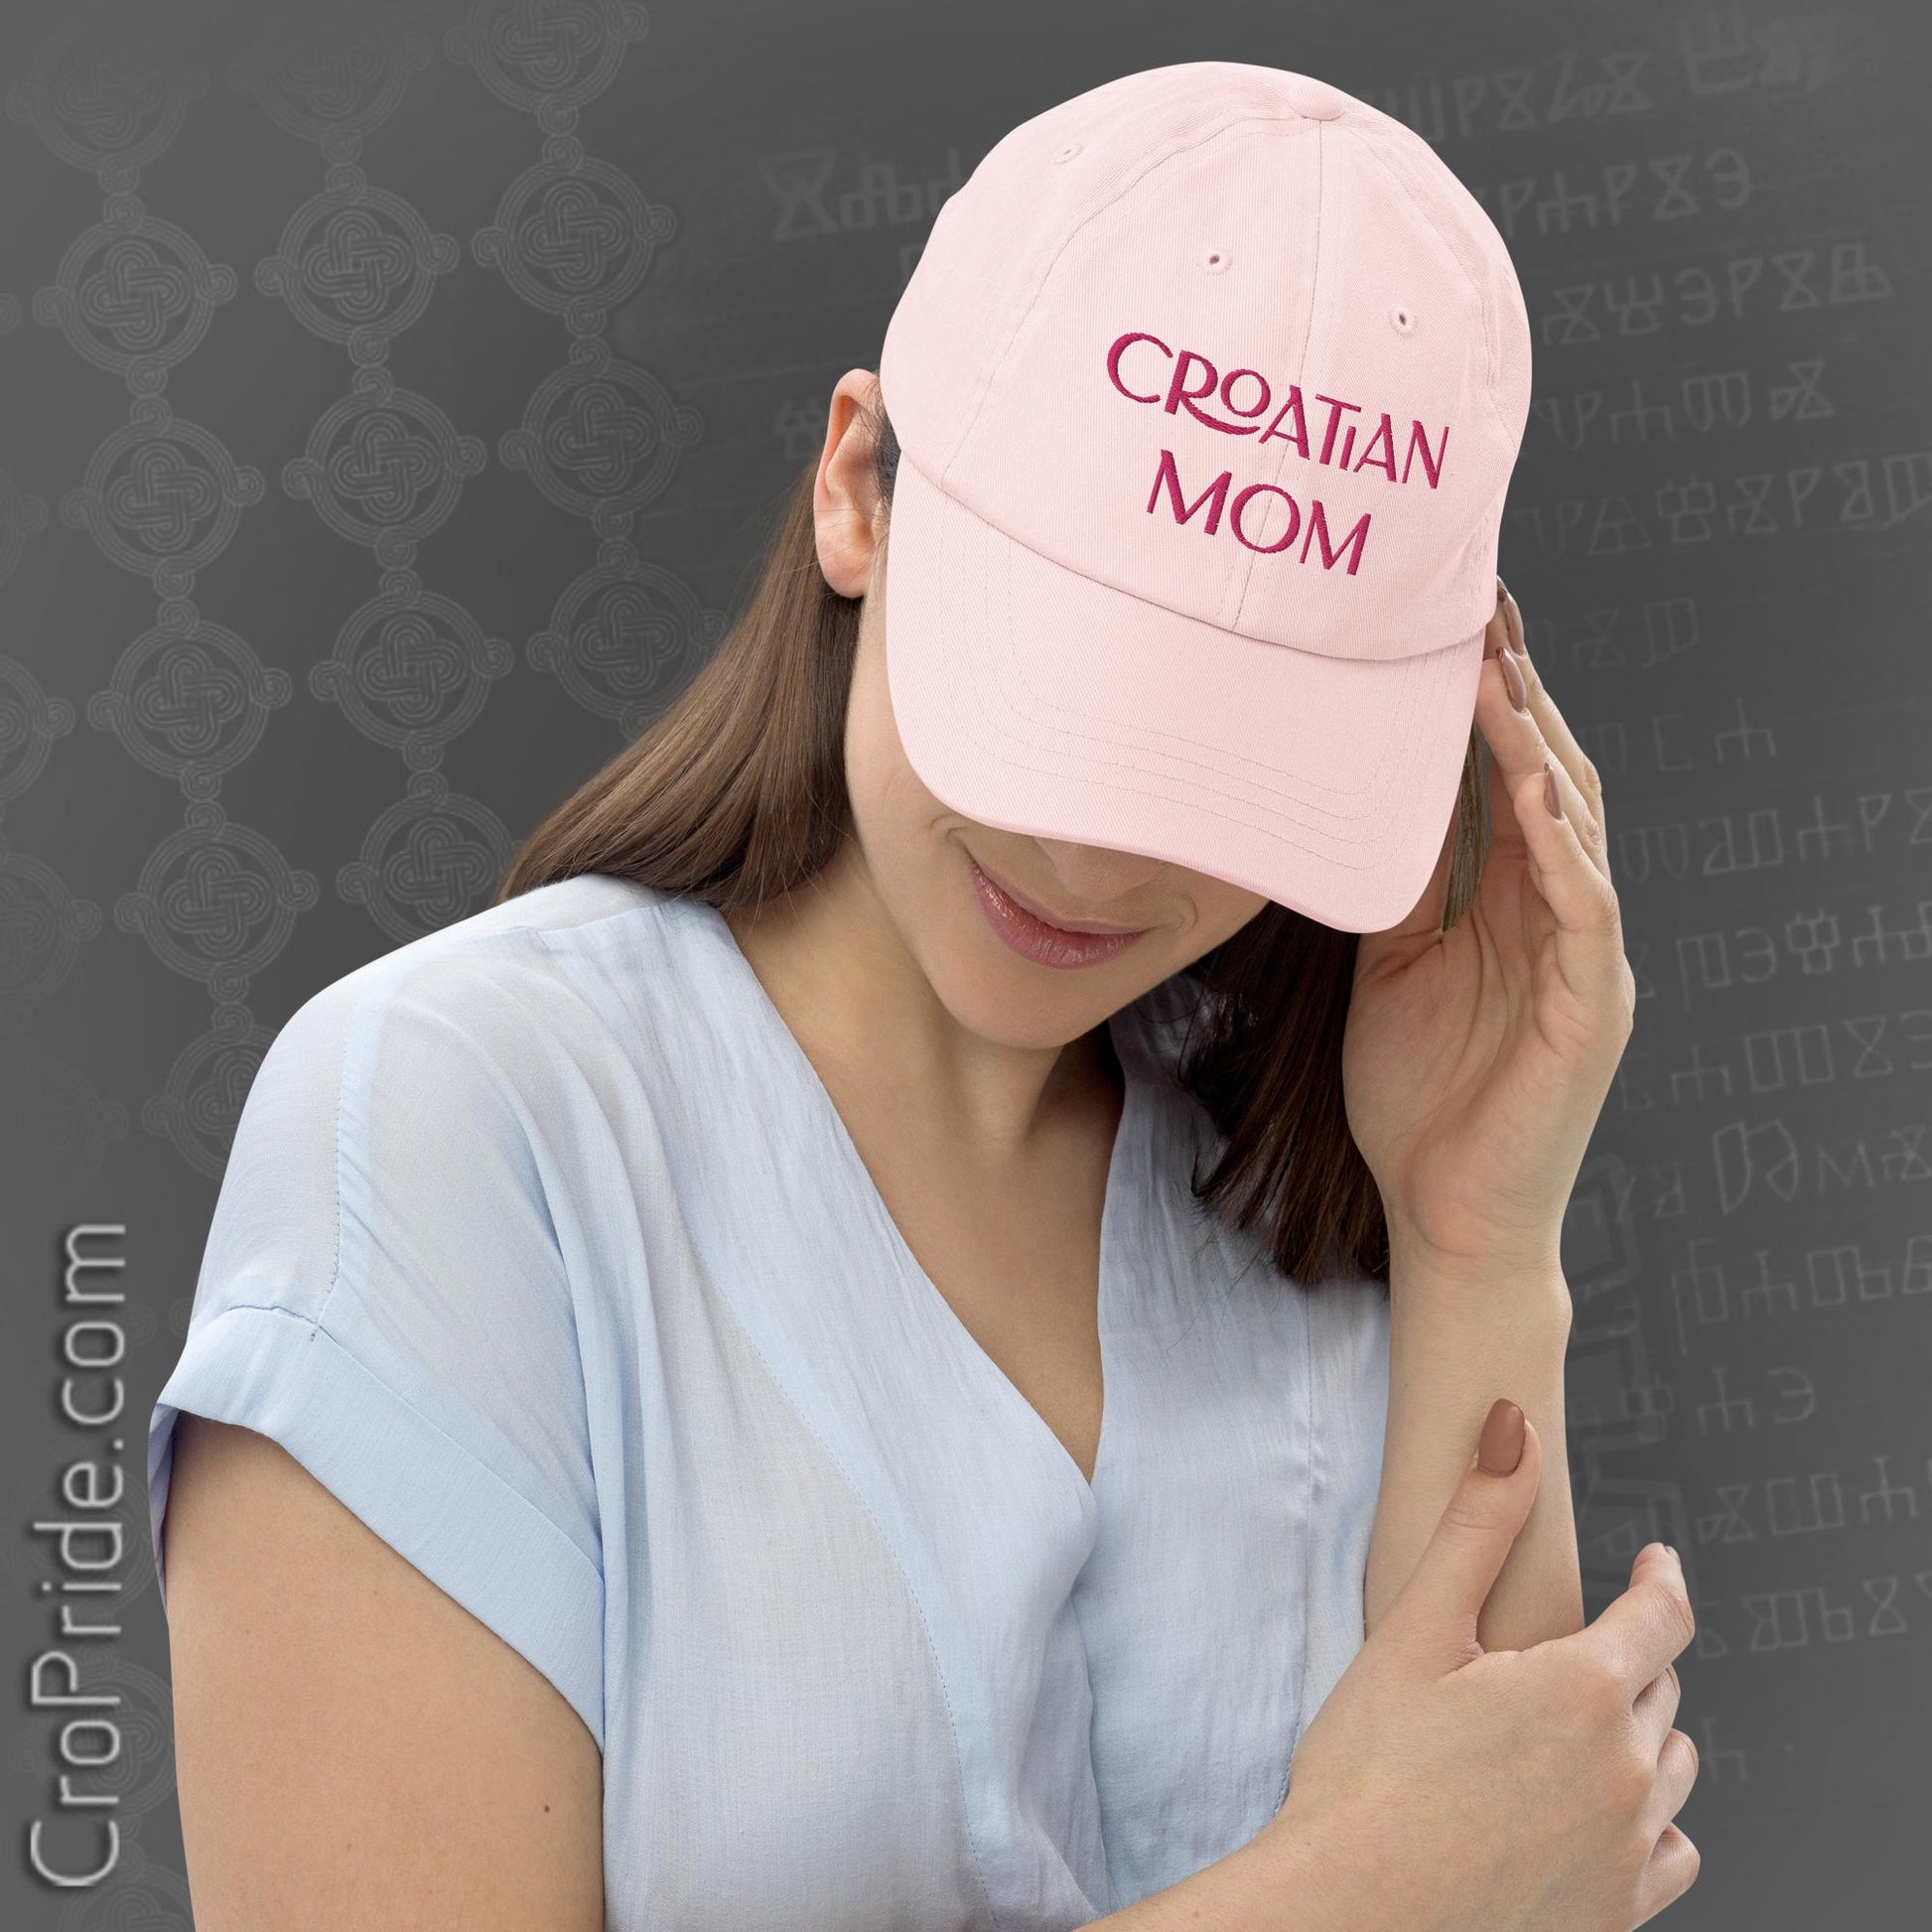 Croatian Mom Hat - Stylish Unstructured Chino Cotton Baseball Cap-